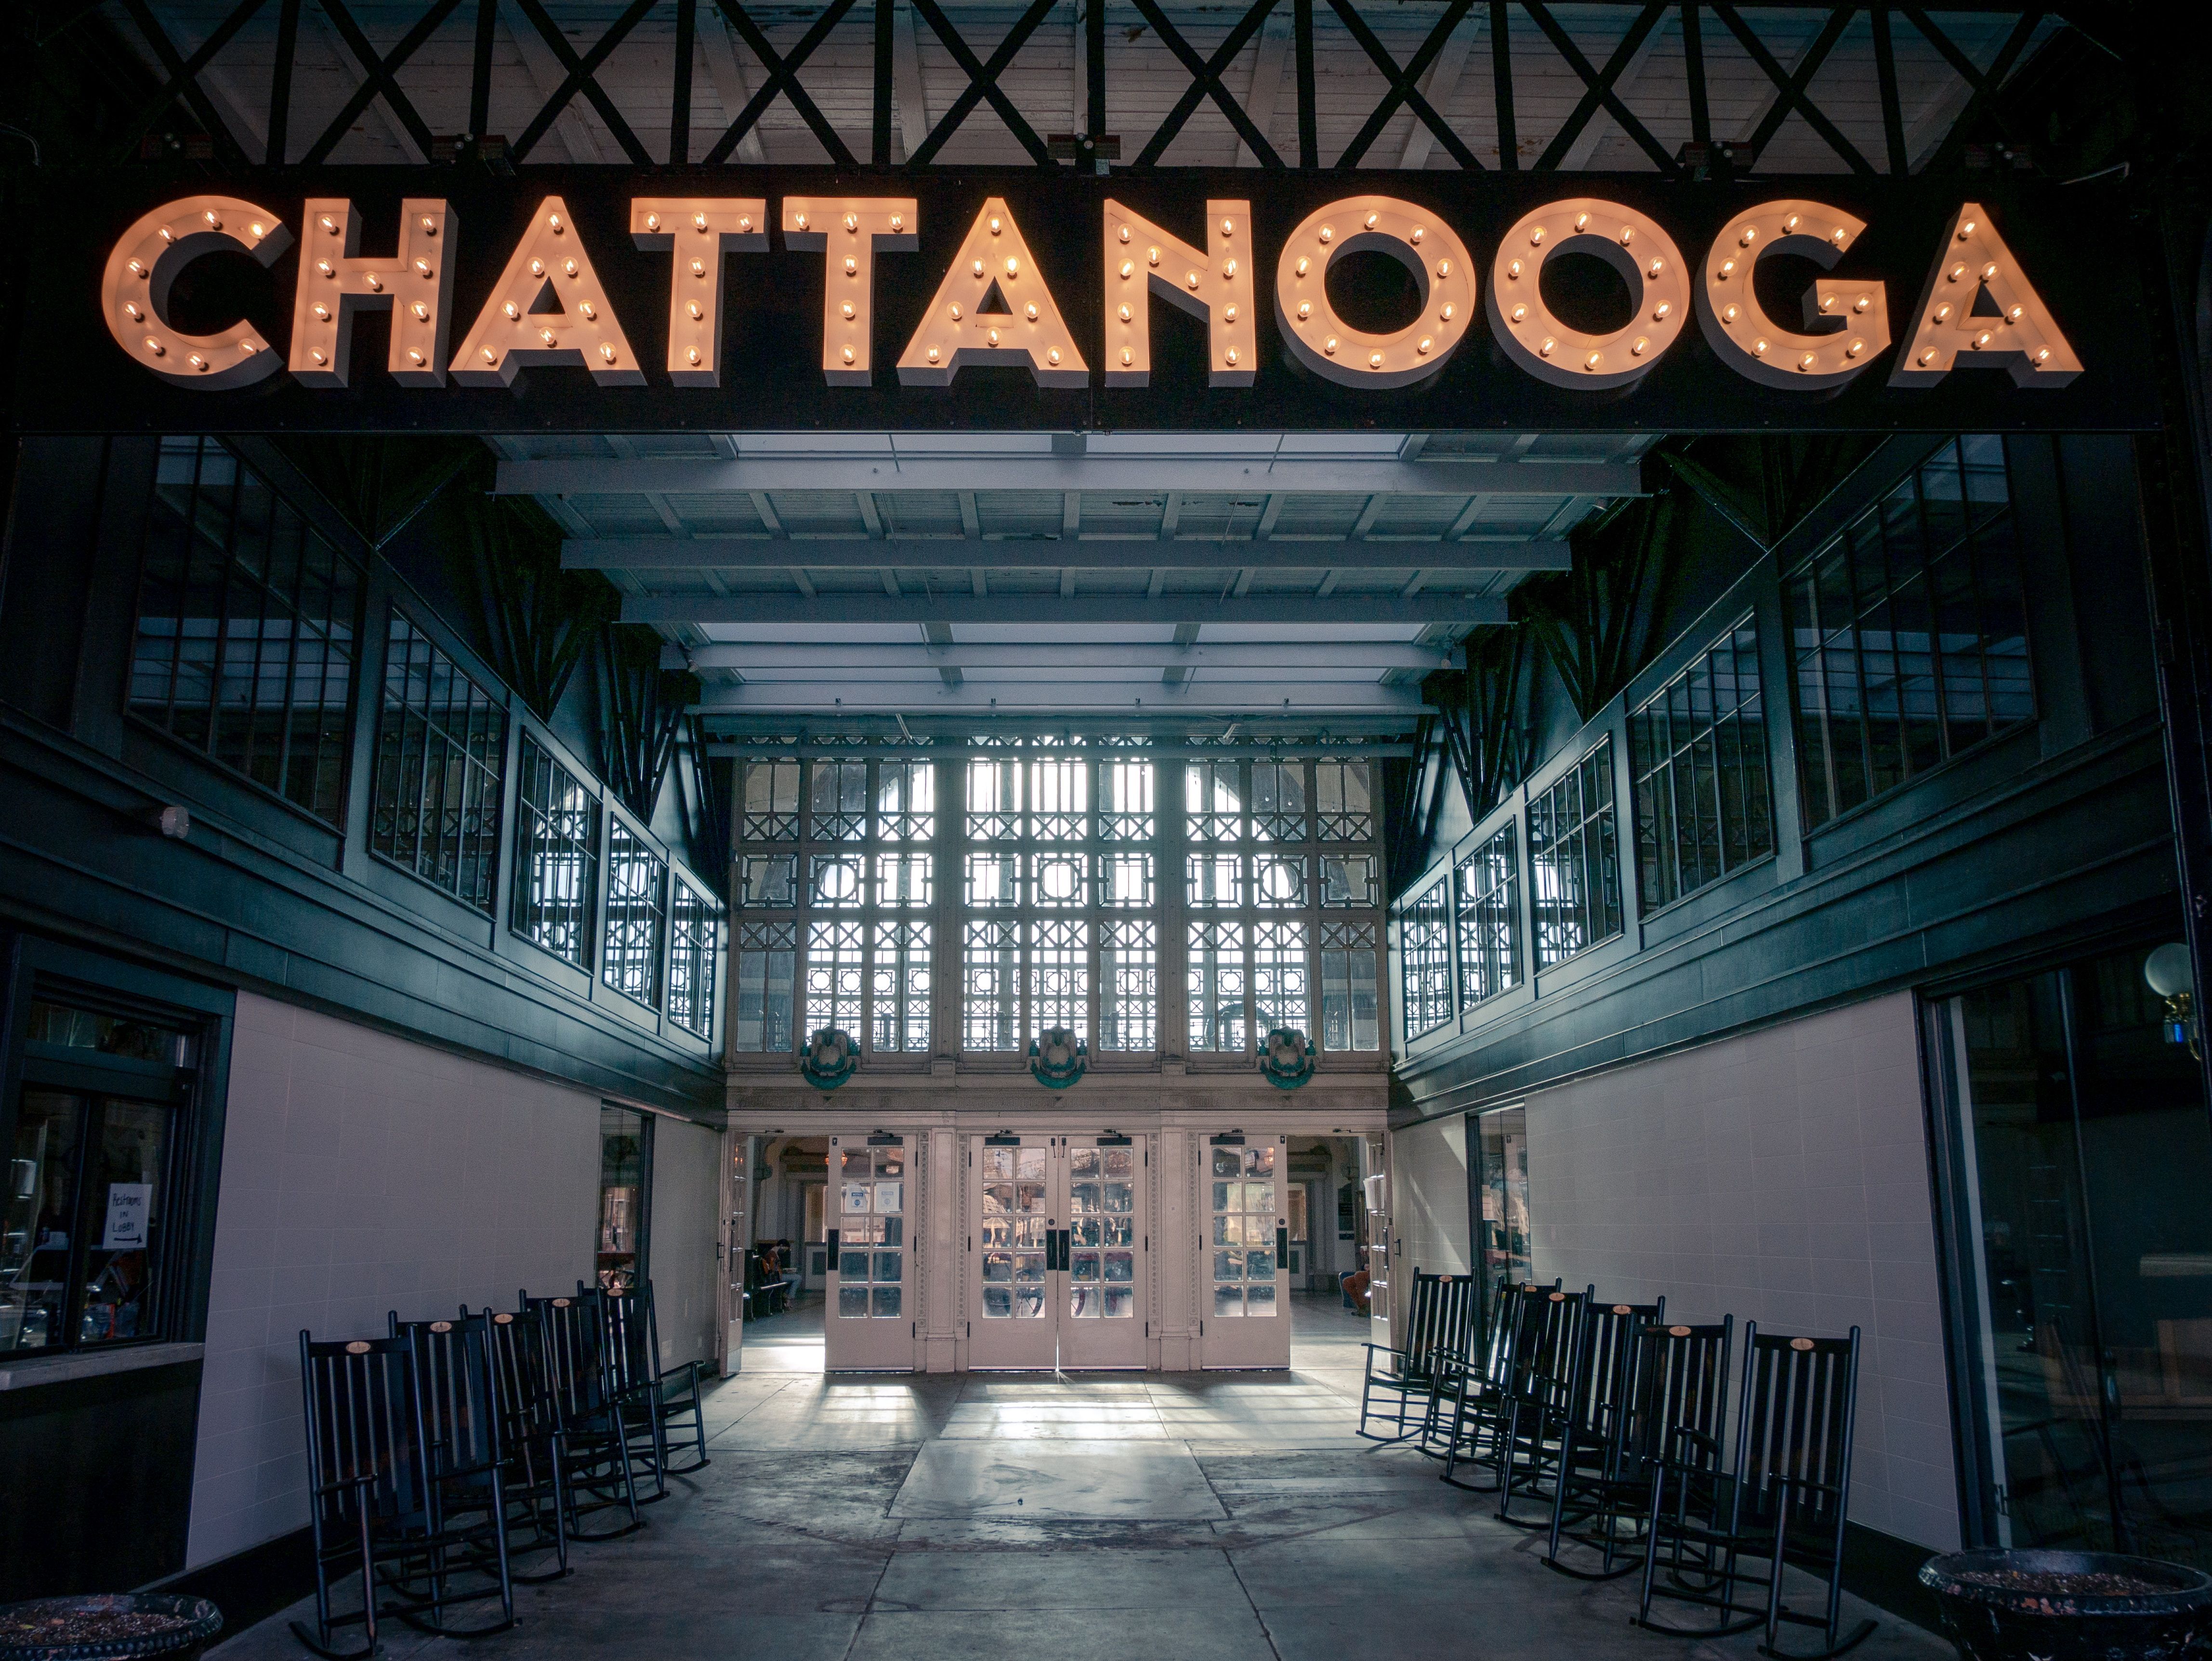 Chattanooga Station